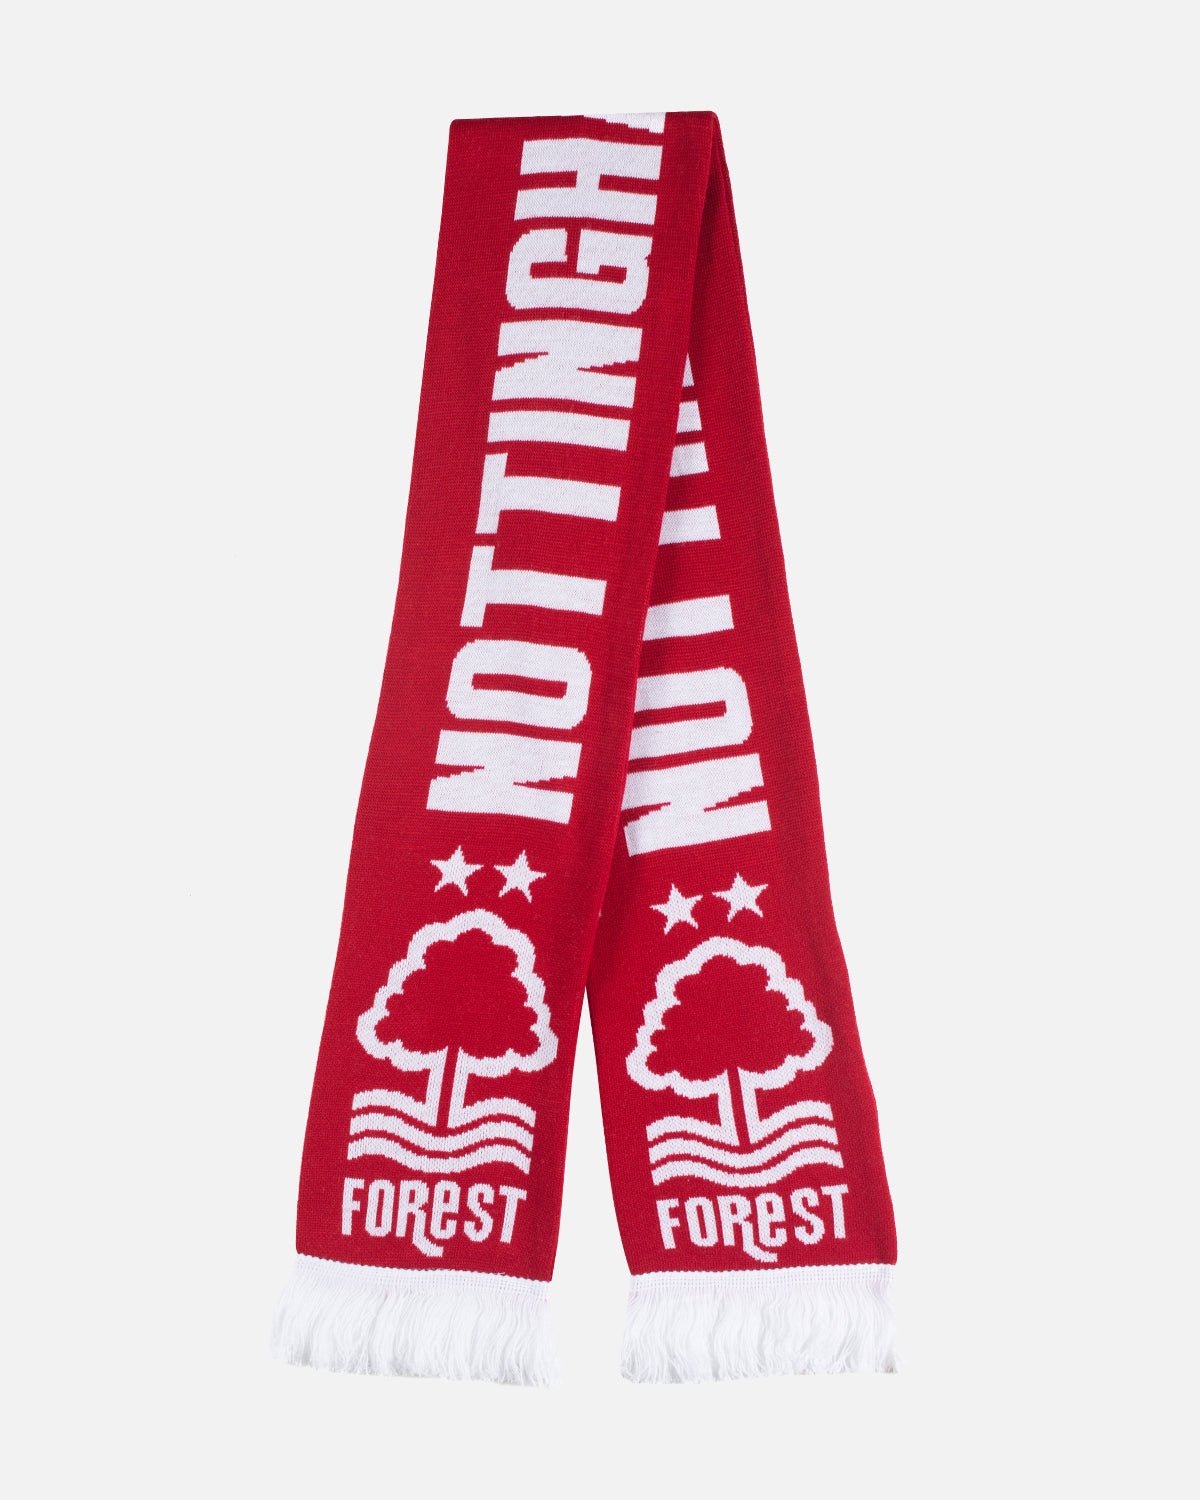 NFFC Nottingham Forest Scarf - Nottingham Forest FC